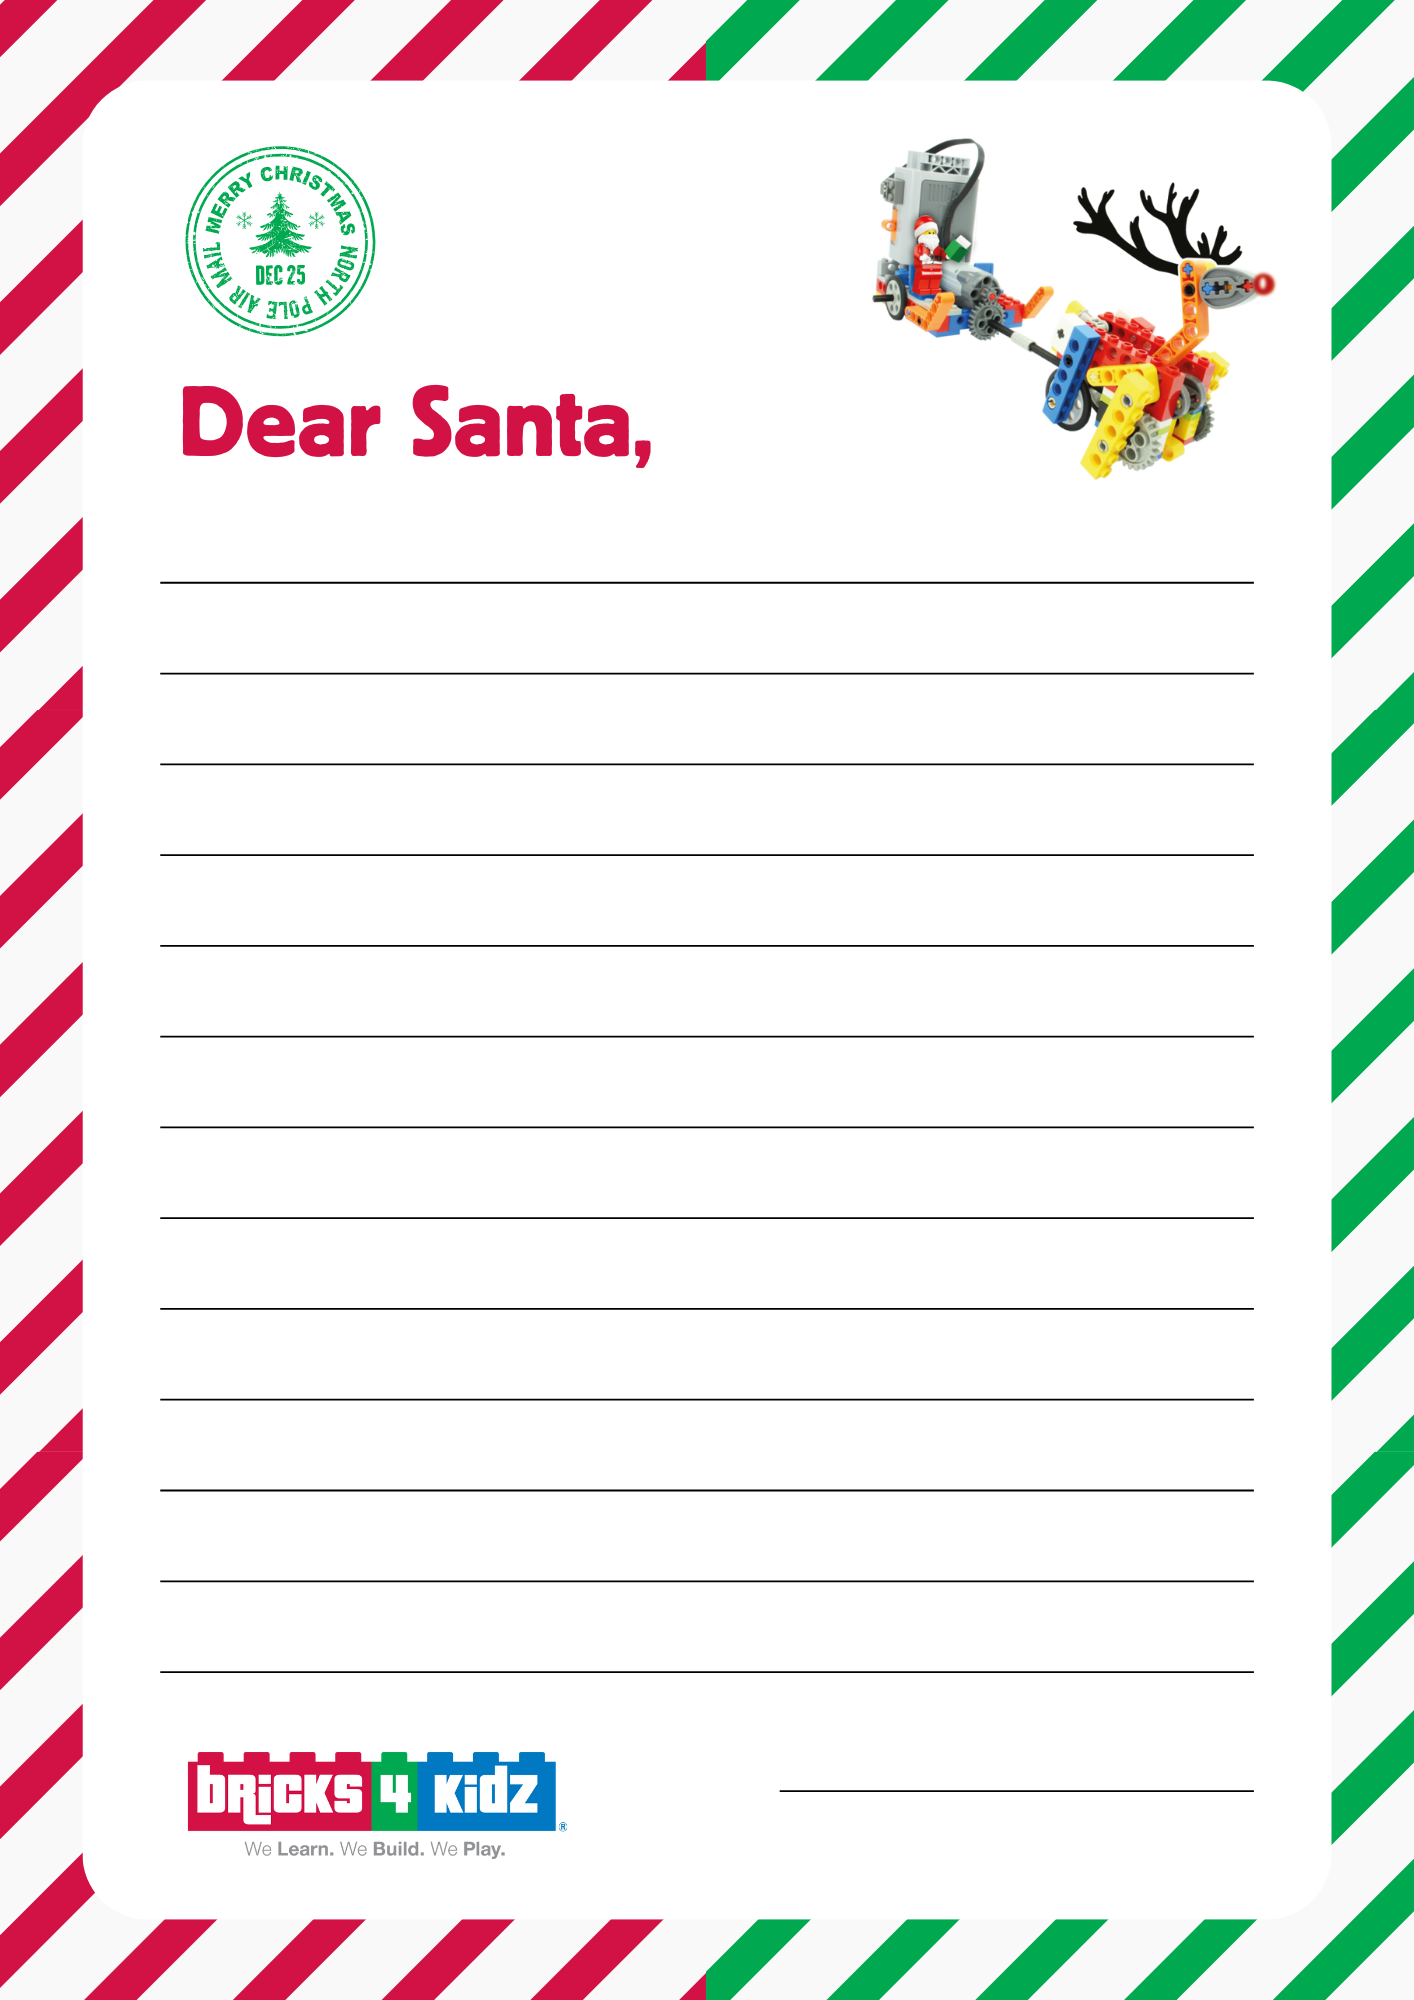 Letter To Santa - Bricks 4 Kidz